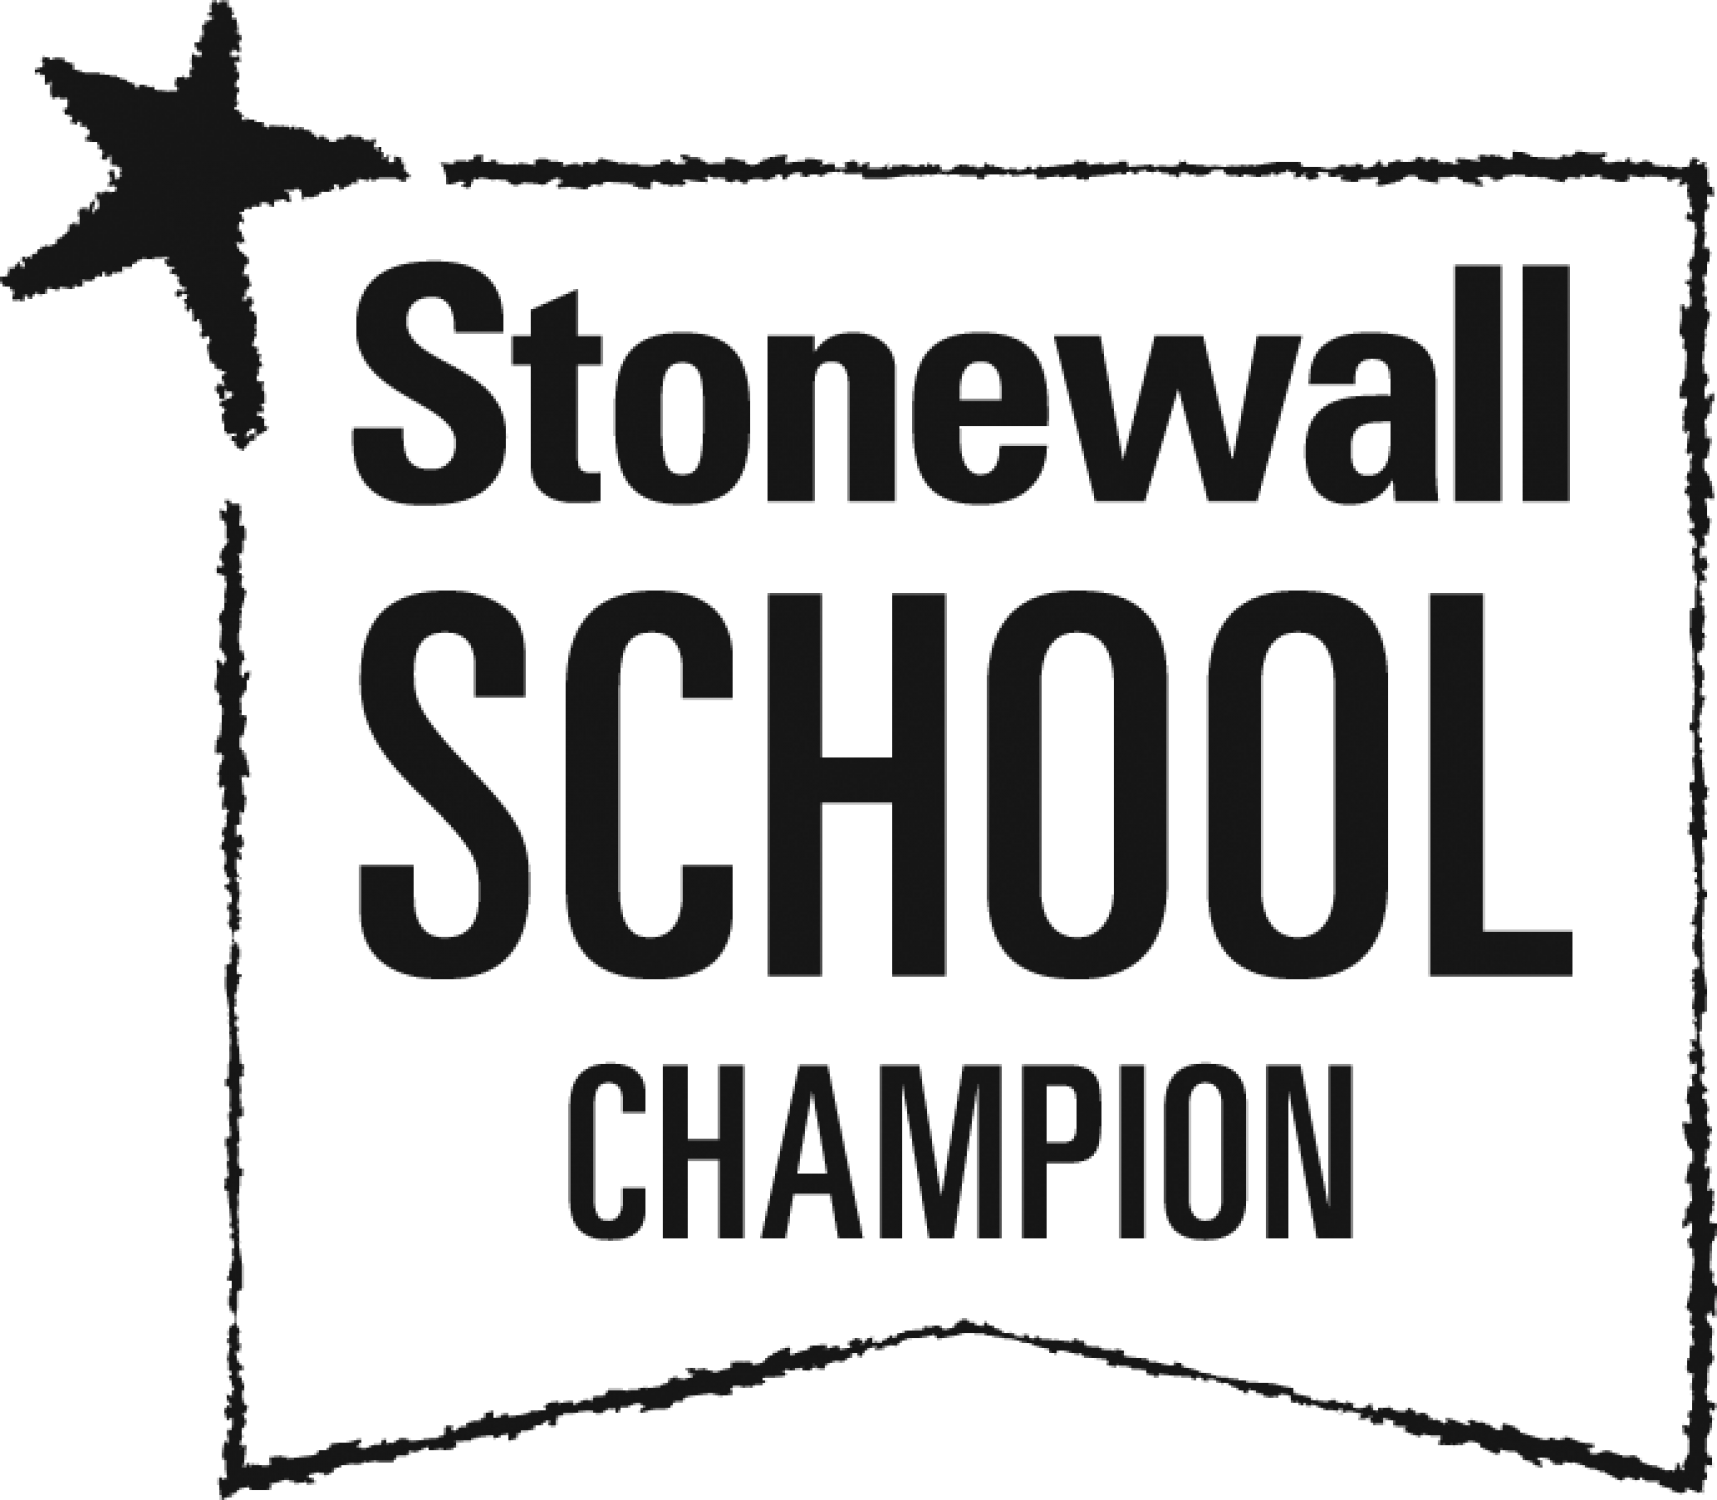 stonewall schoolchampion logo black 0